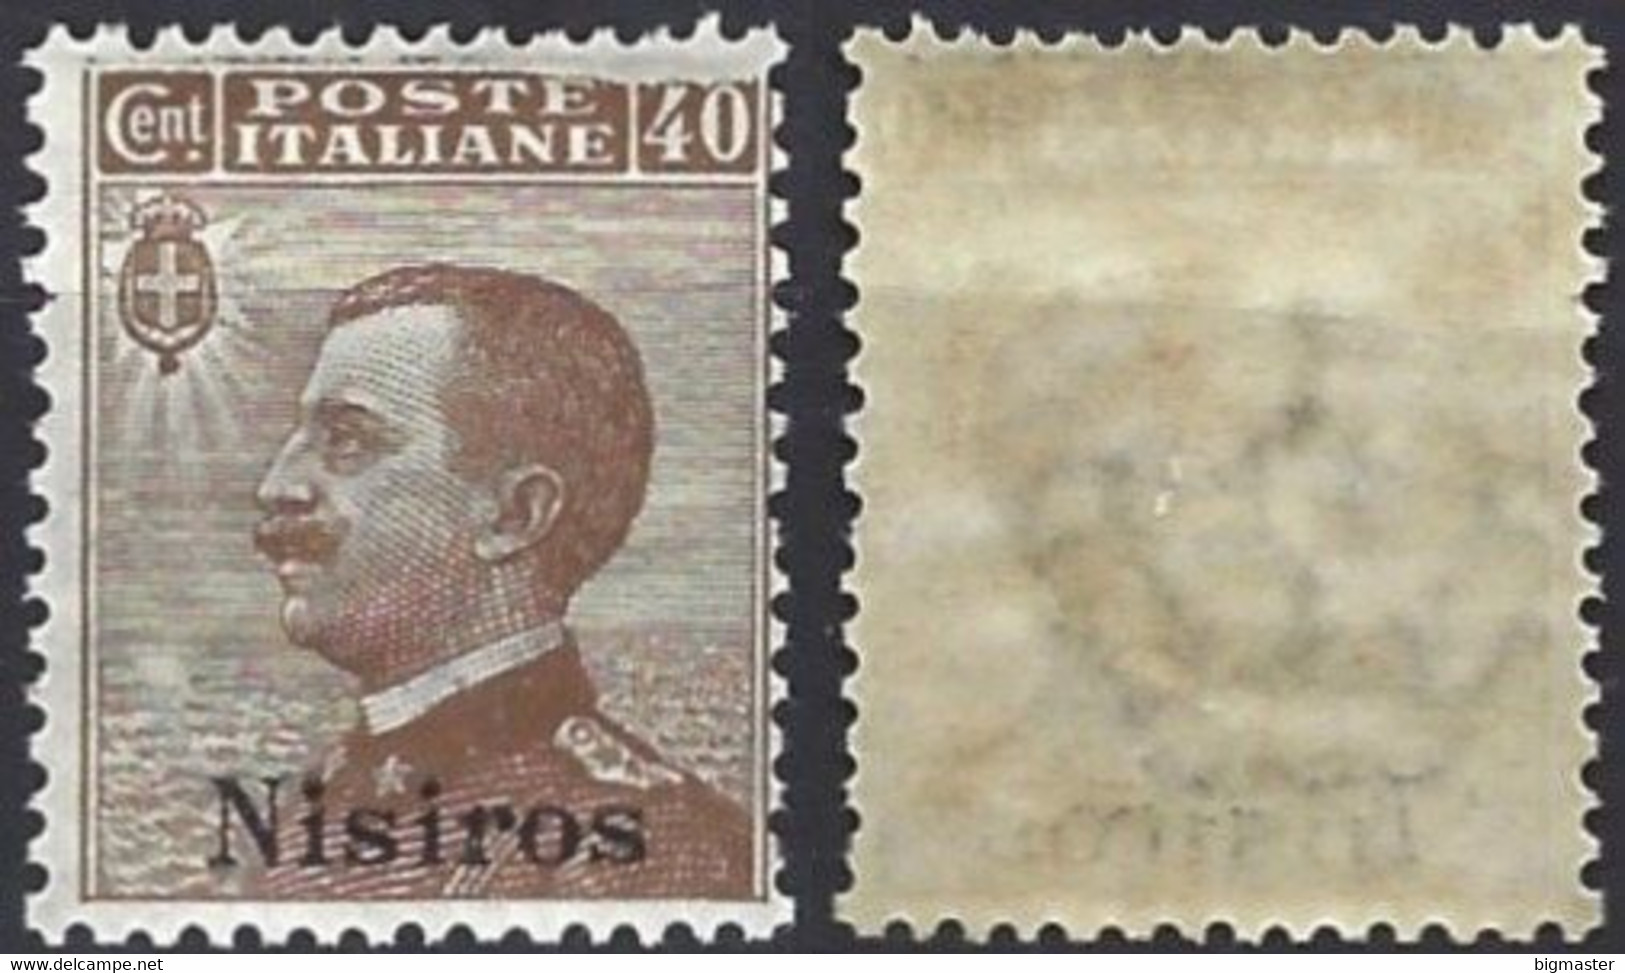 1912 Regno D'Italia IG 1912 IT-EG NI6 Franc Italia Soprast Nisiros New - Egée (Nisiro)